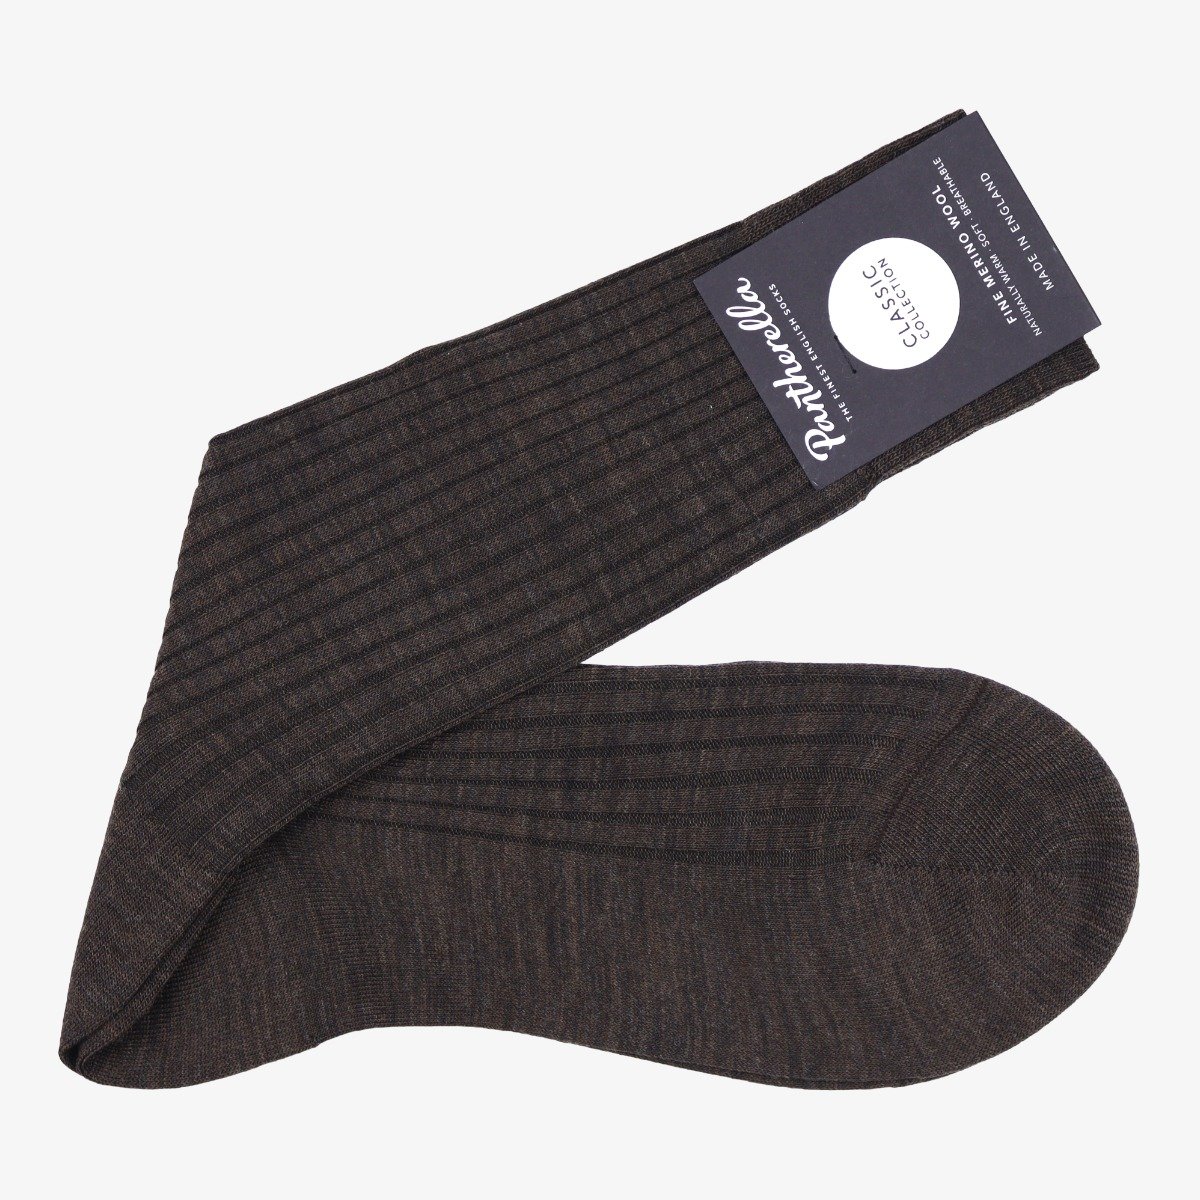 Pantherella Laburnum dark brown ribbed merino wool socks